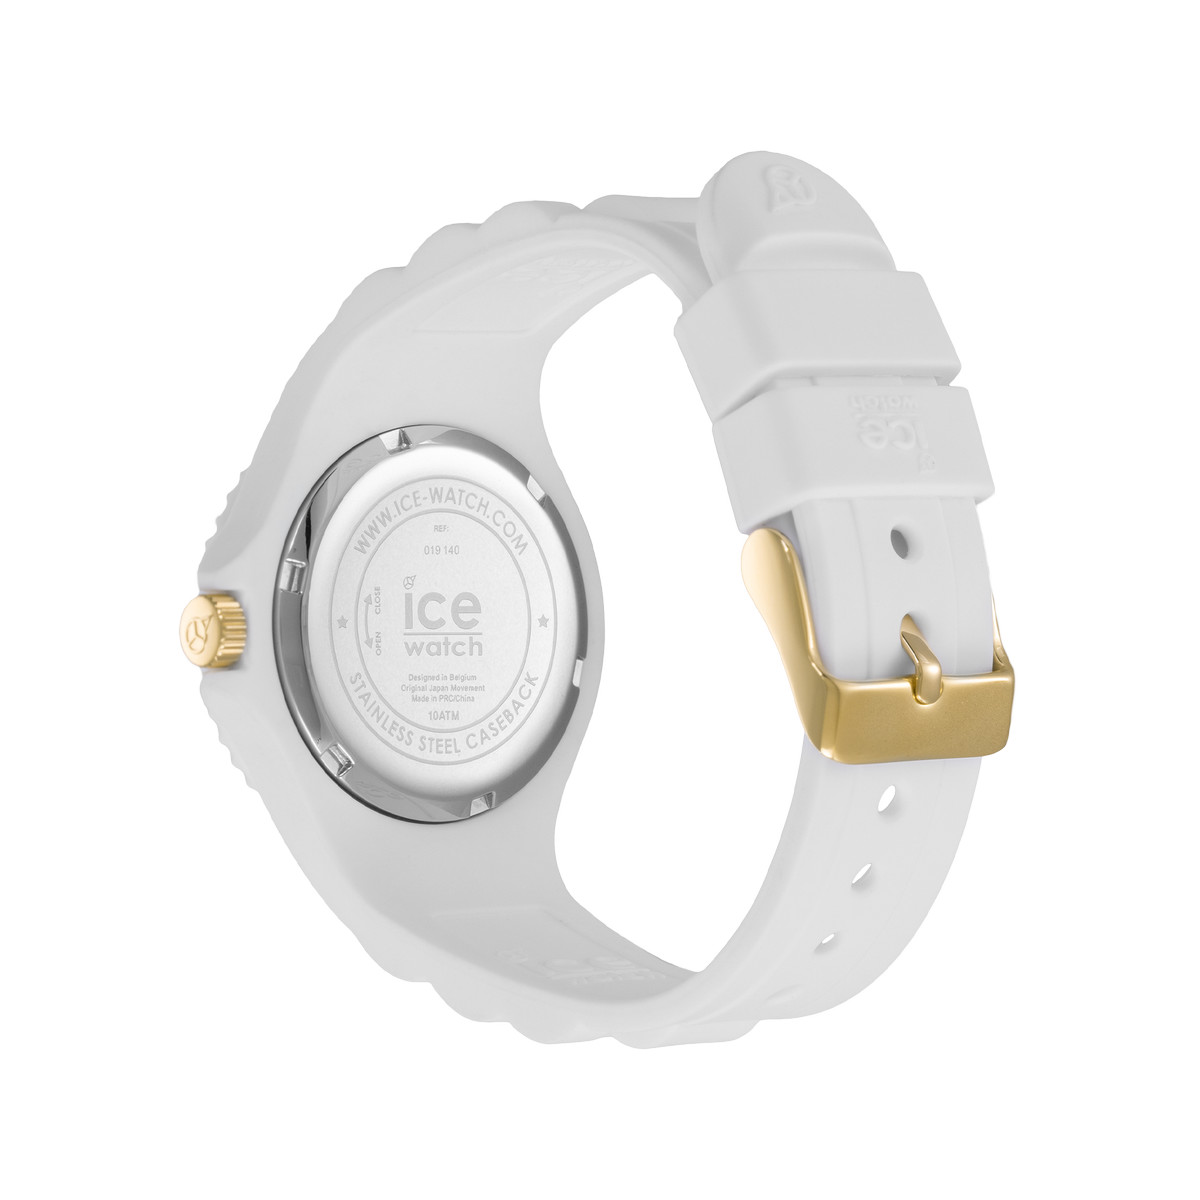 Montre Ice Watch small femme plastique silicone blanc - vue 3